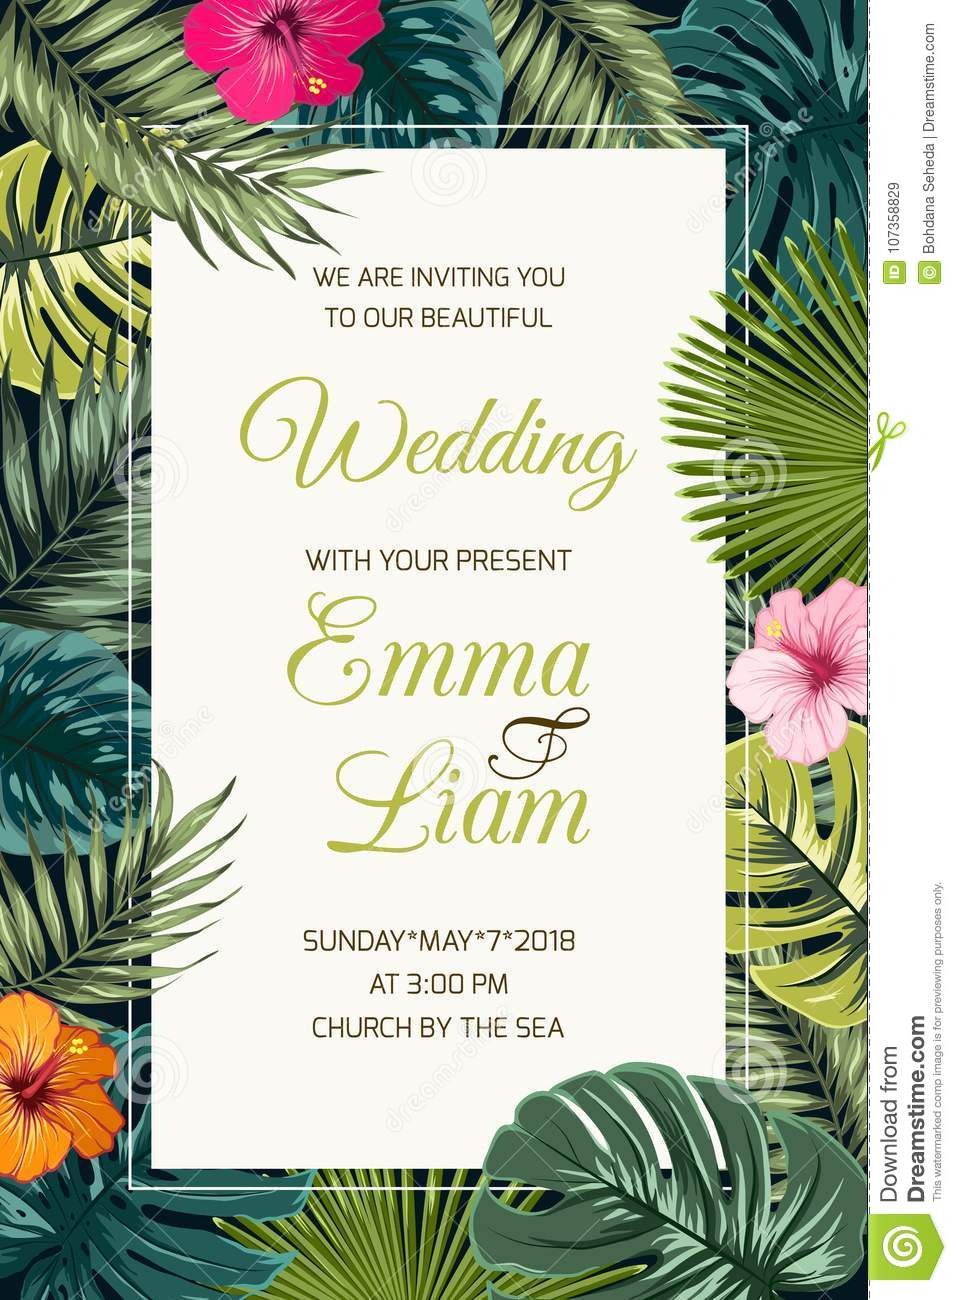 Wedding Event Invitation Card Template. Stock Vector Within Event Invitation Card Template